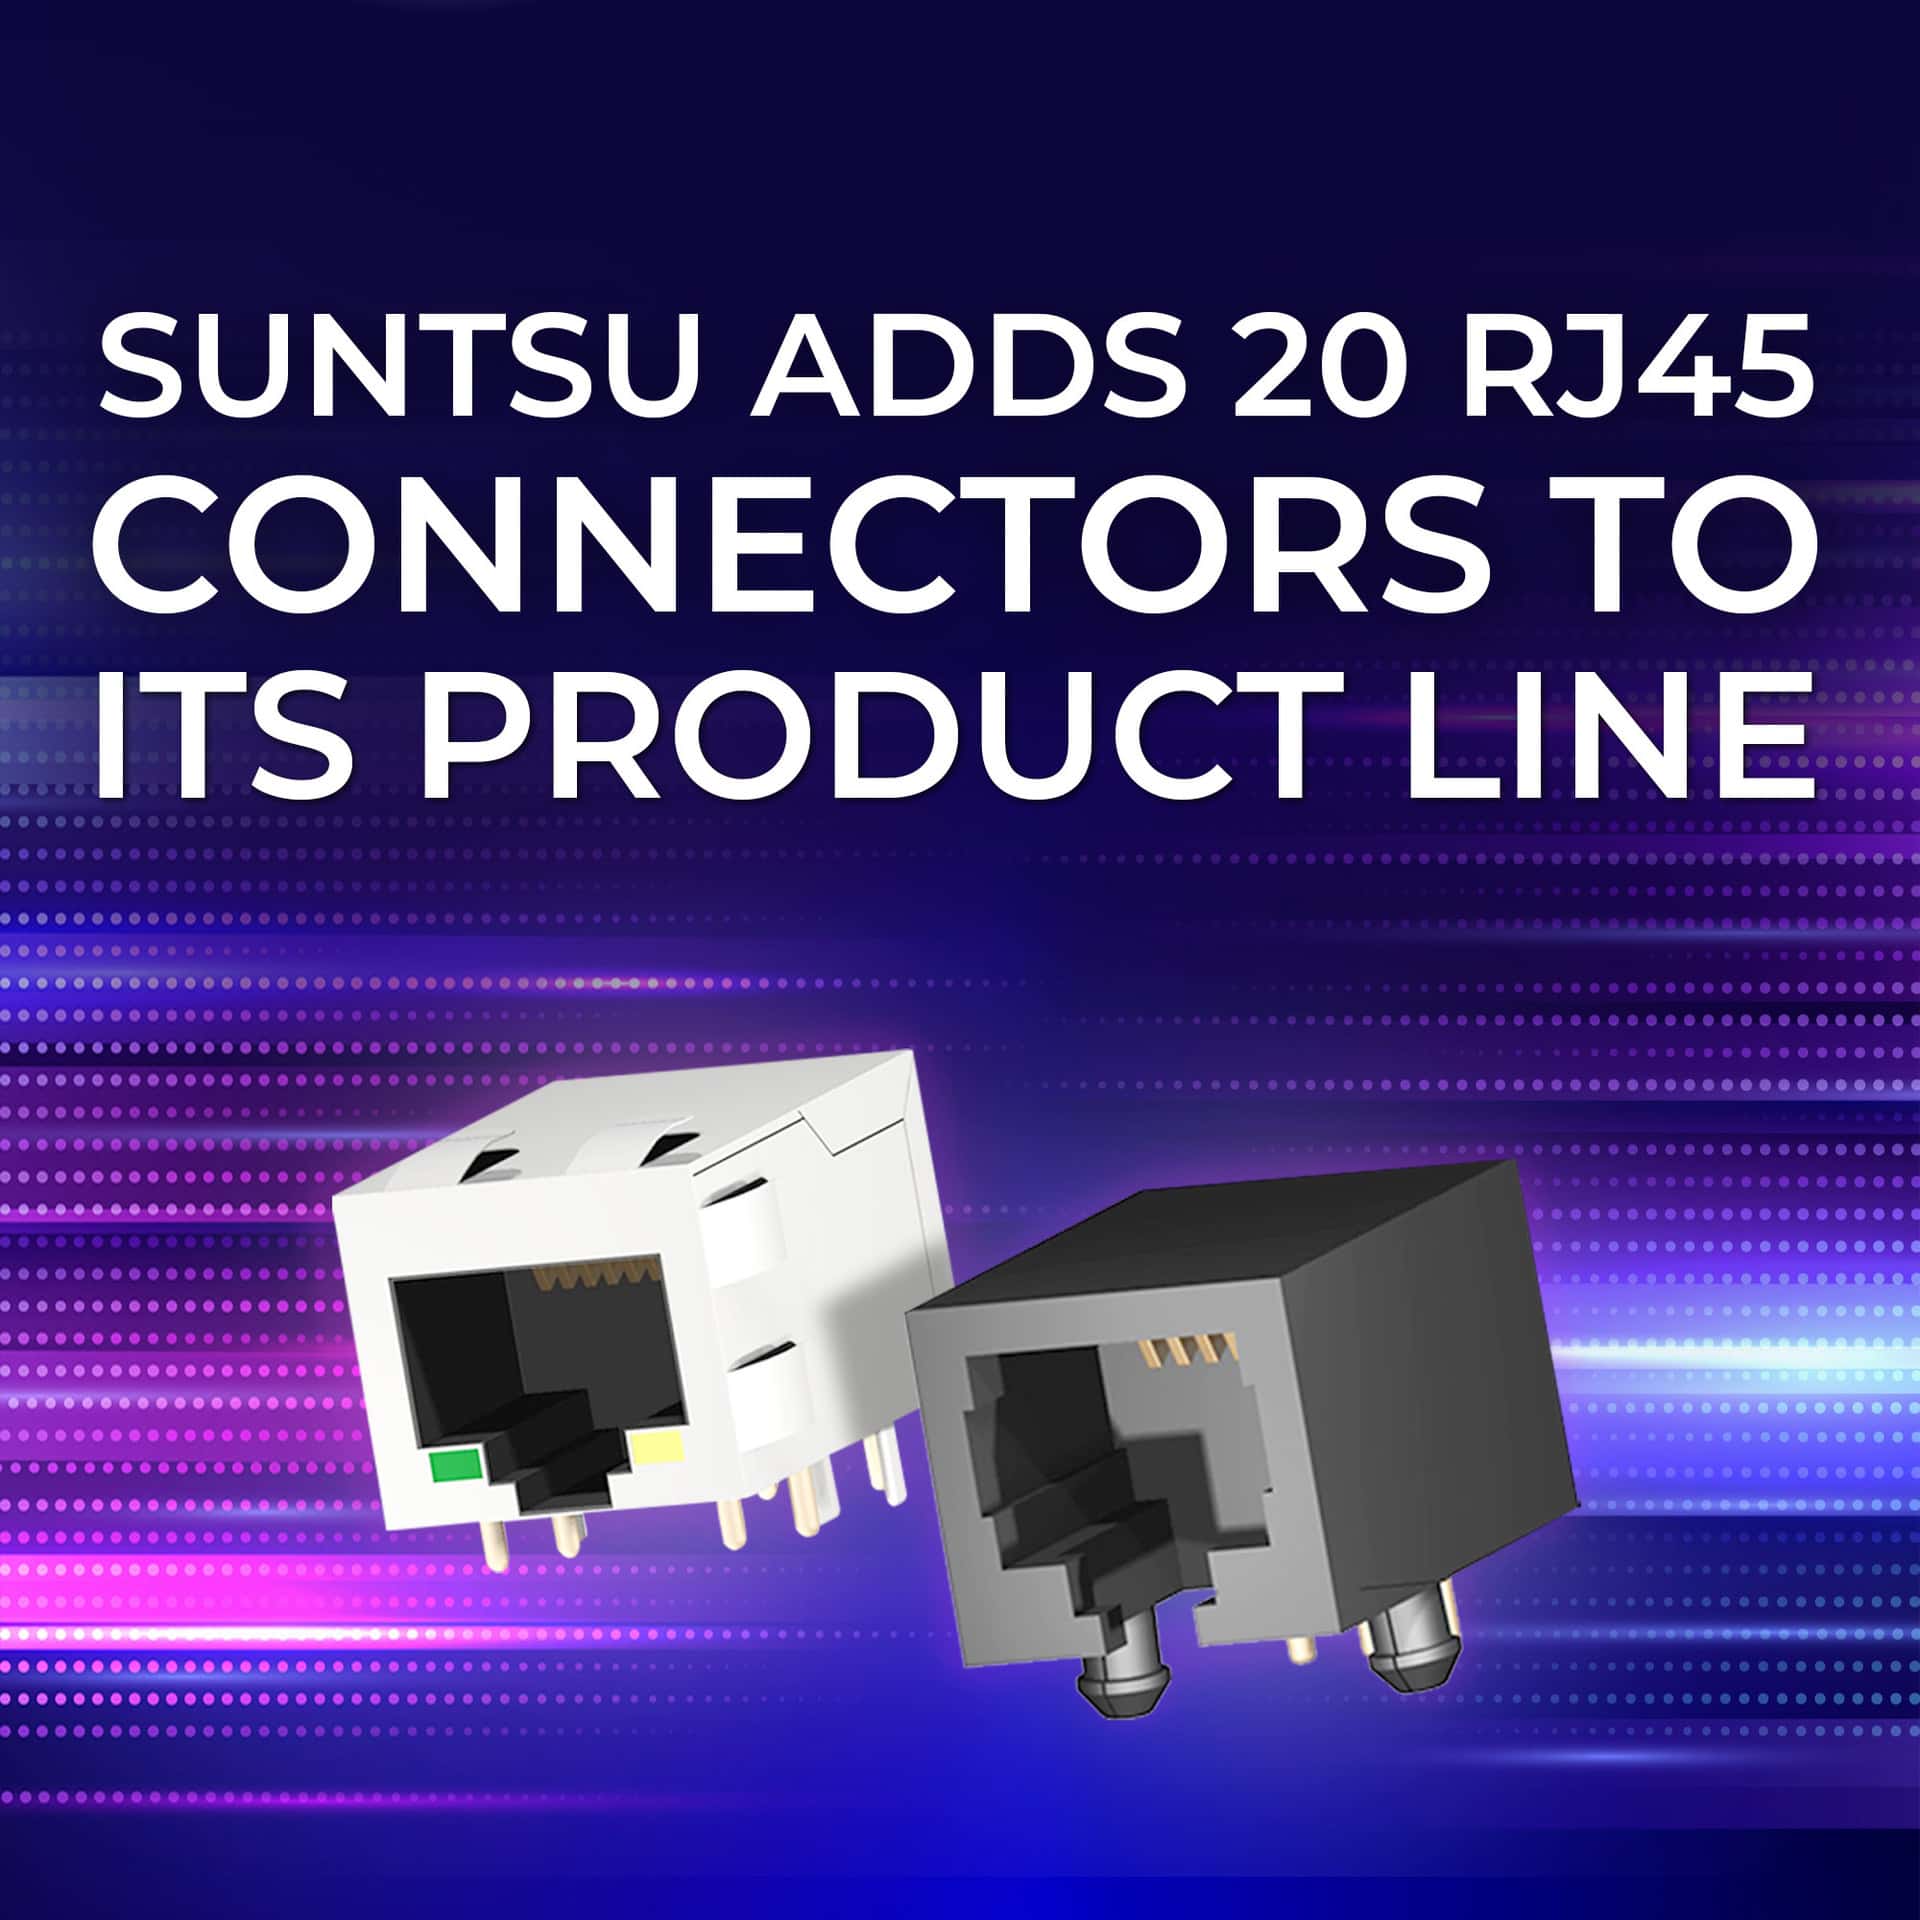 Suntsu Adds 20 RJ45 Connectors to Its Product Line